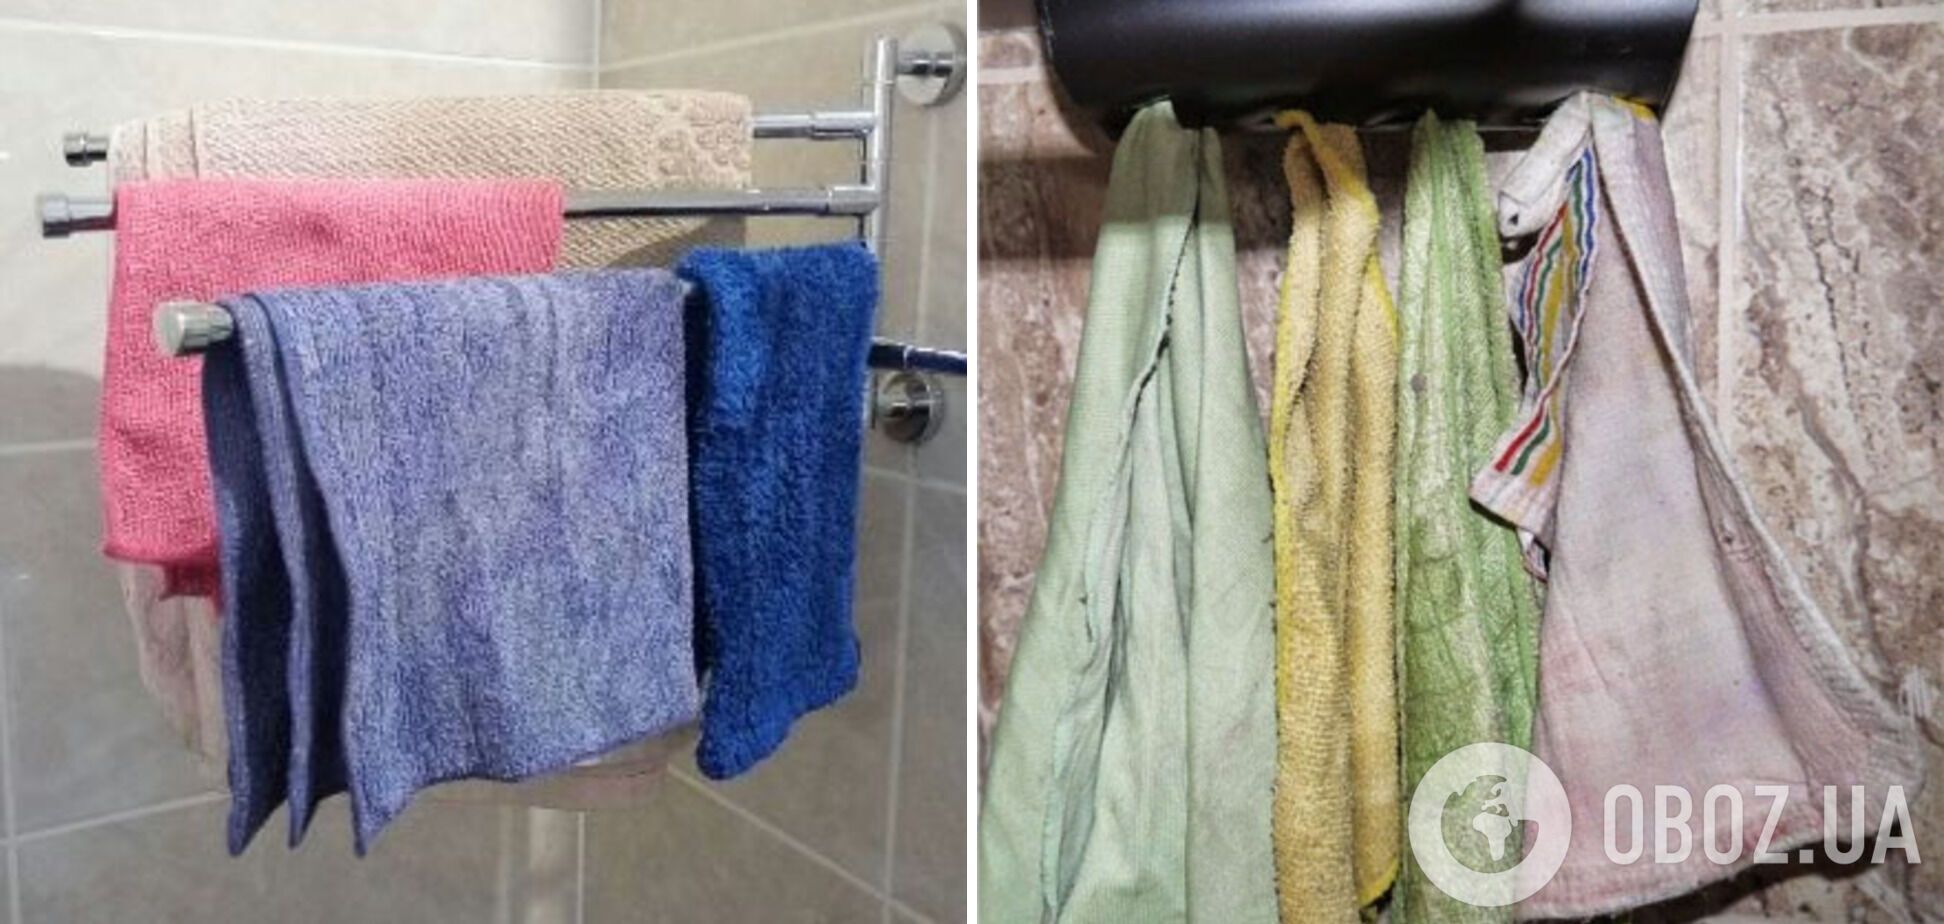 Тряпки и старые полотенца выдают неопрятную хозяйку.